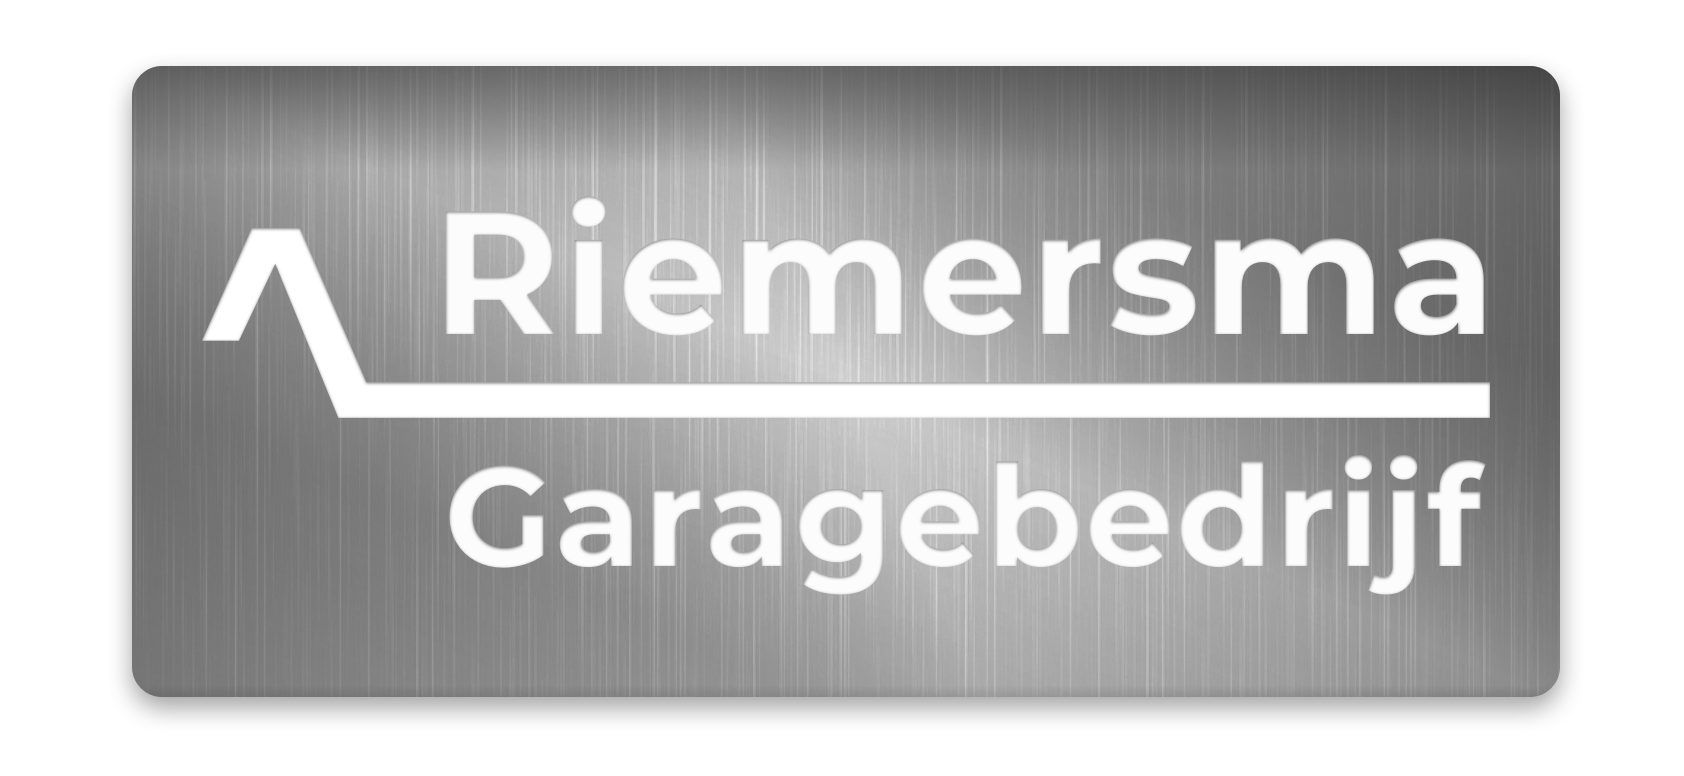 Garagebedrijf Riemersma logo